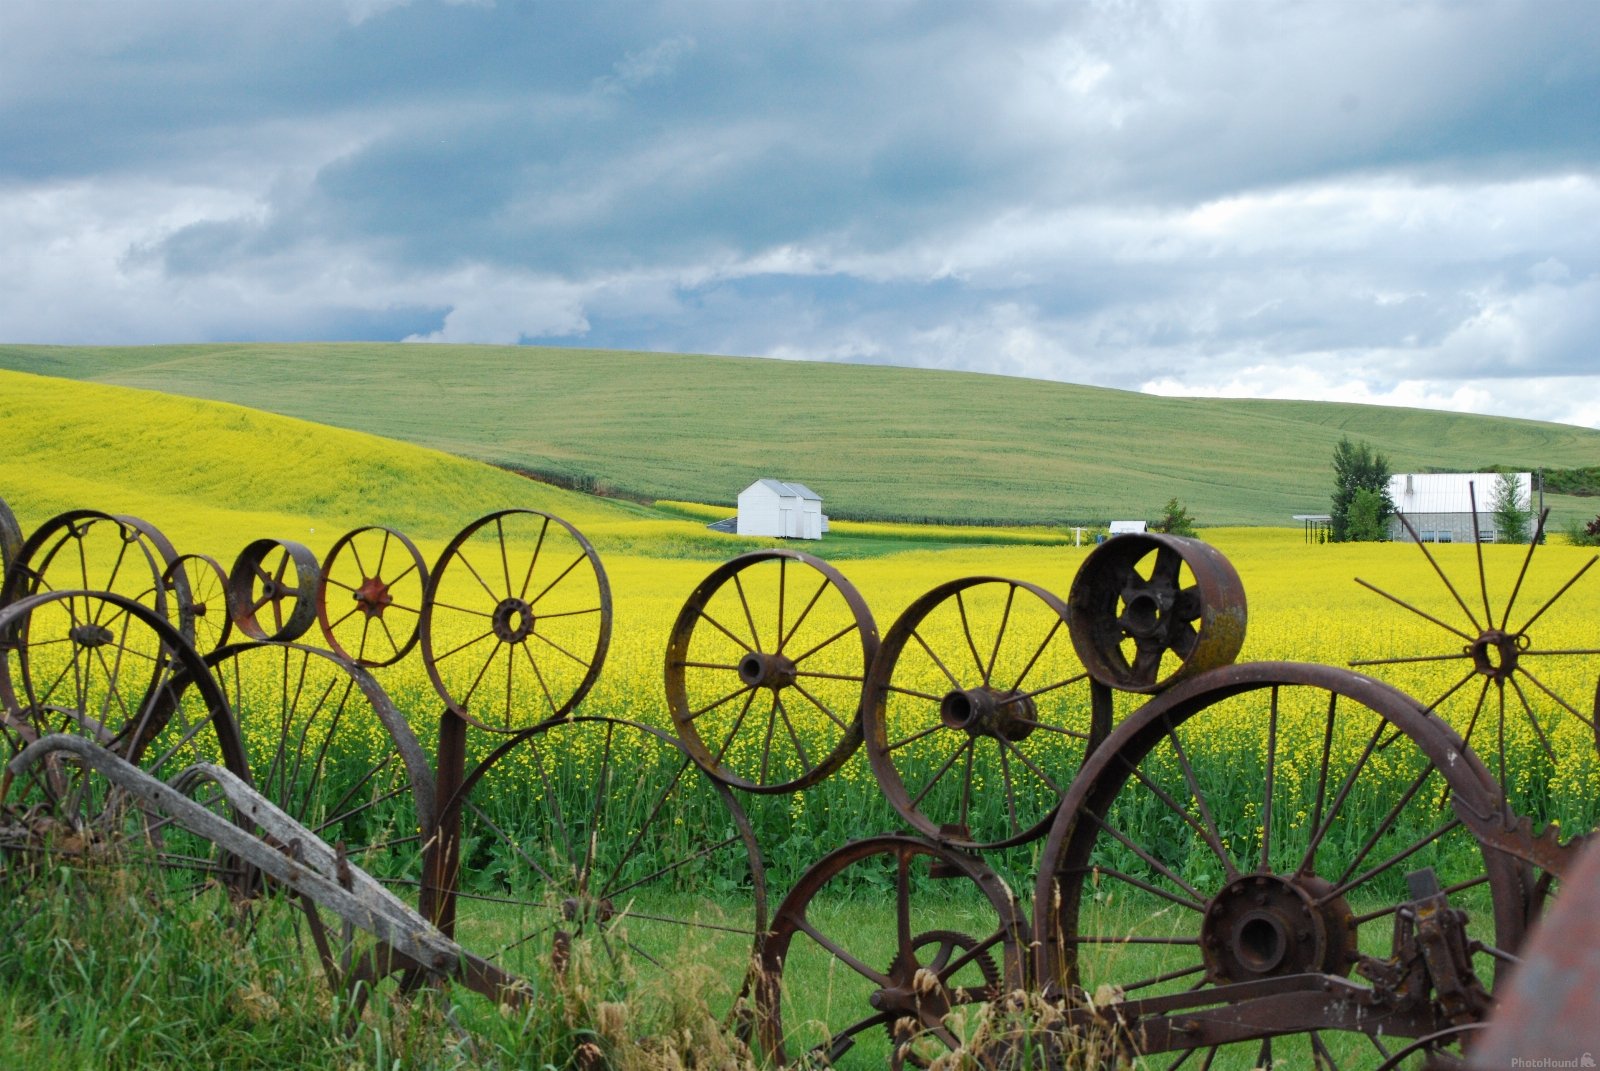 Image of Dahmen Barn and Wagon Wheel Fence by Rod Schwartz